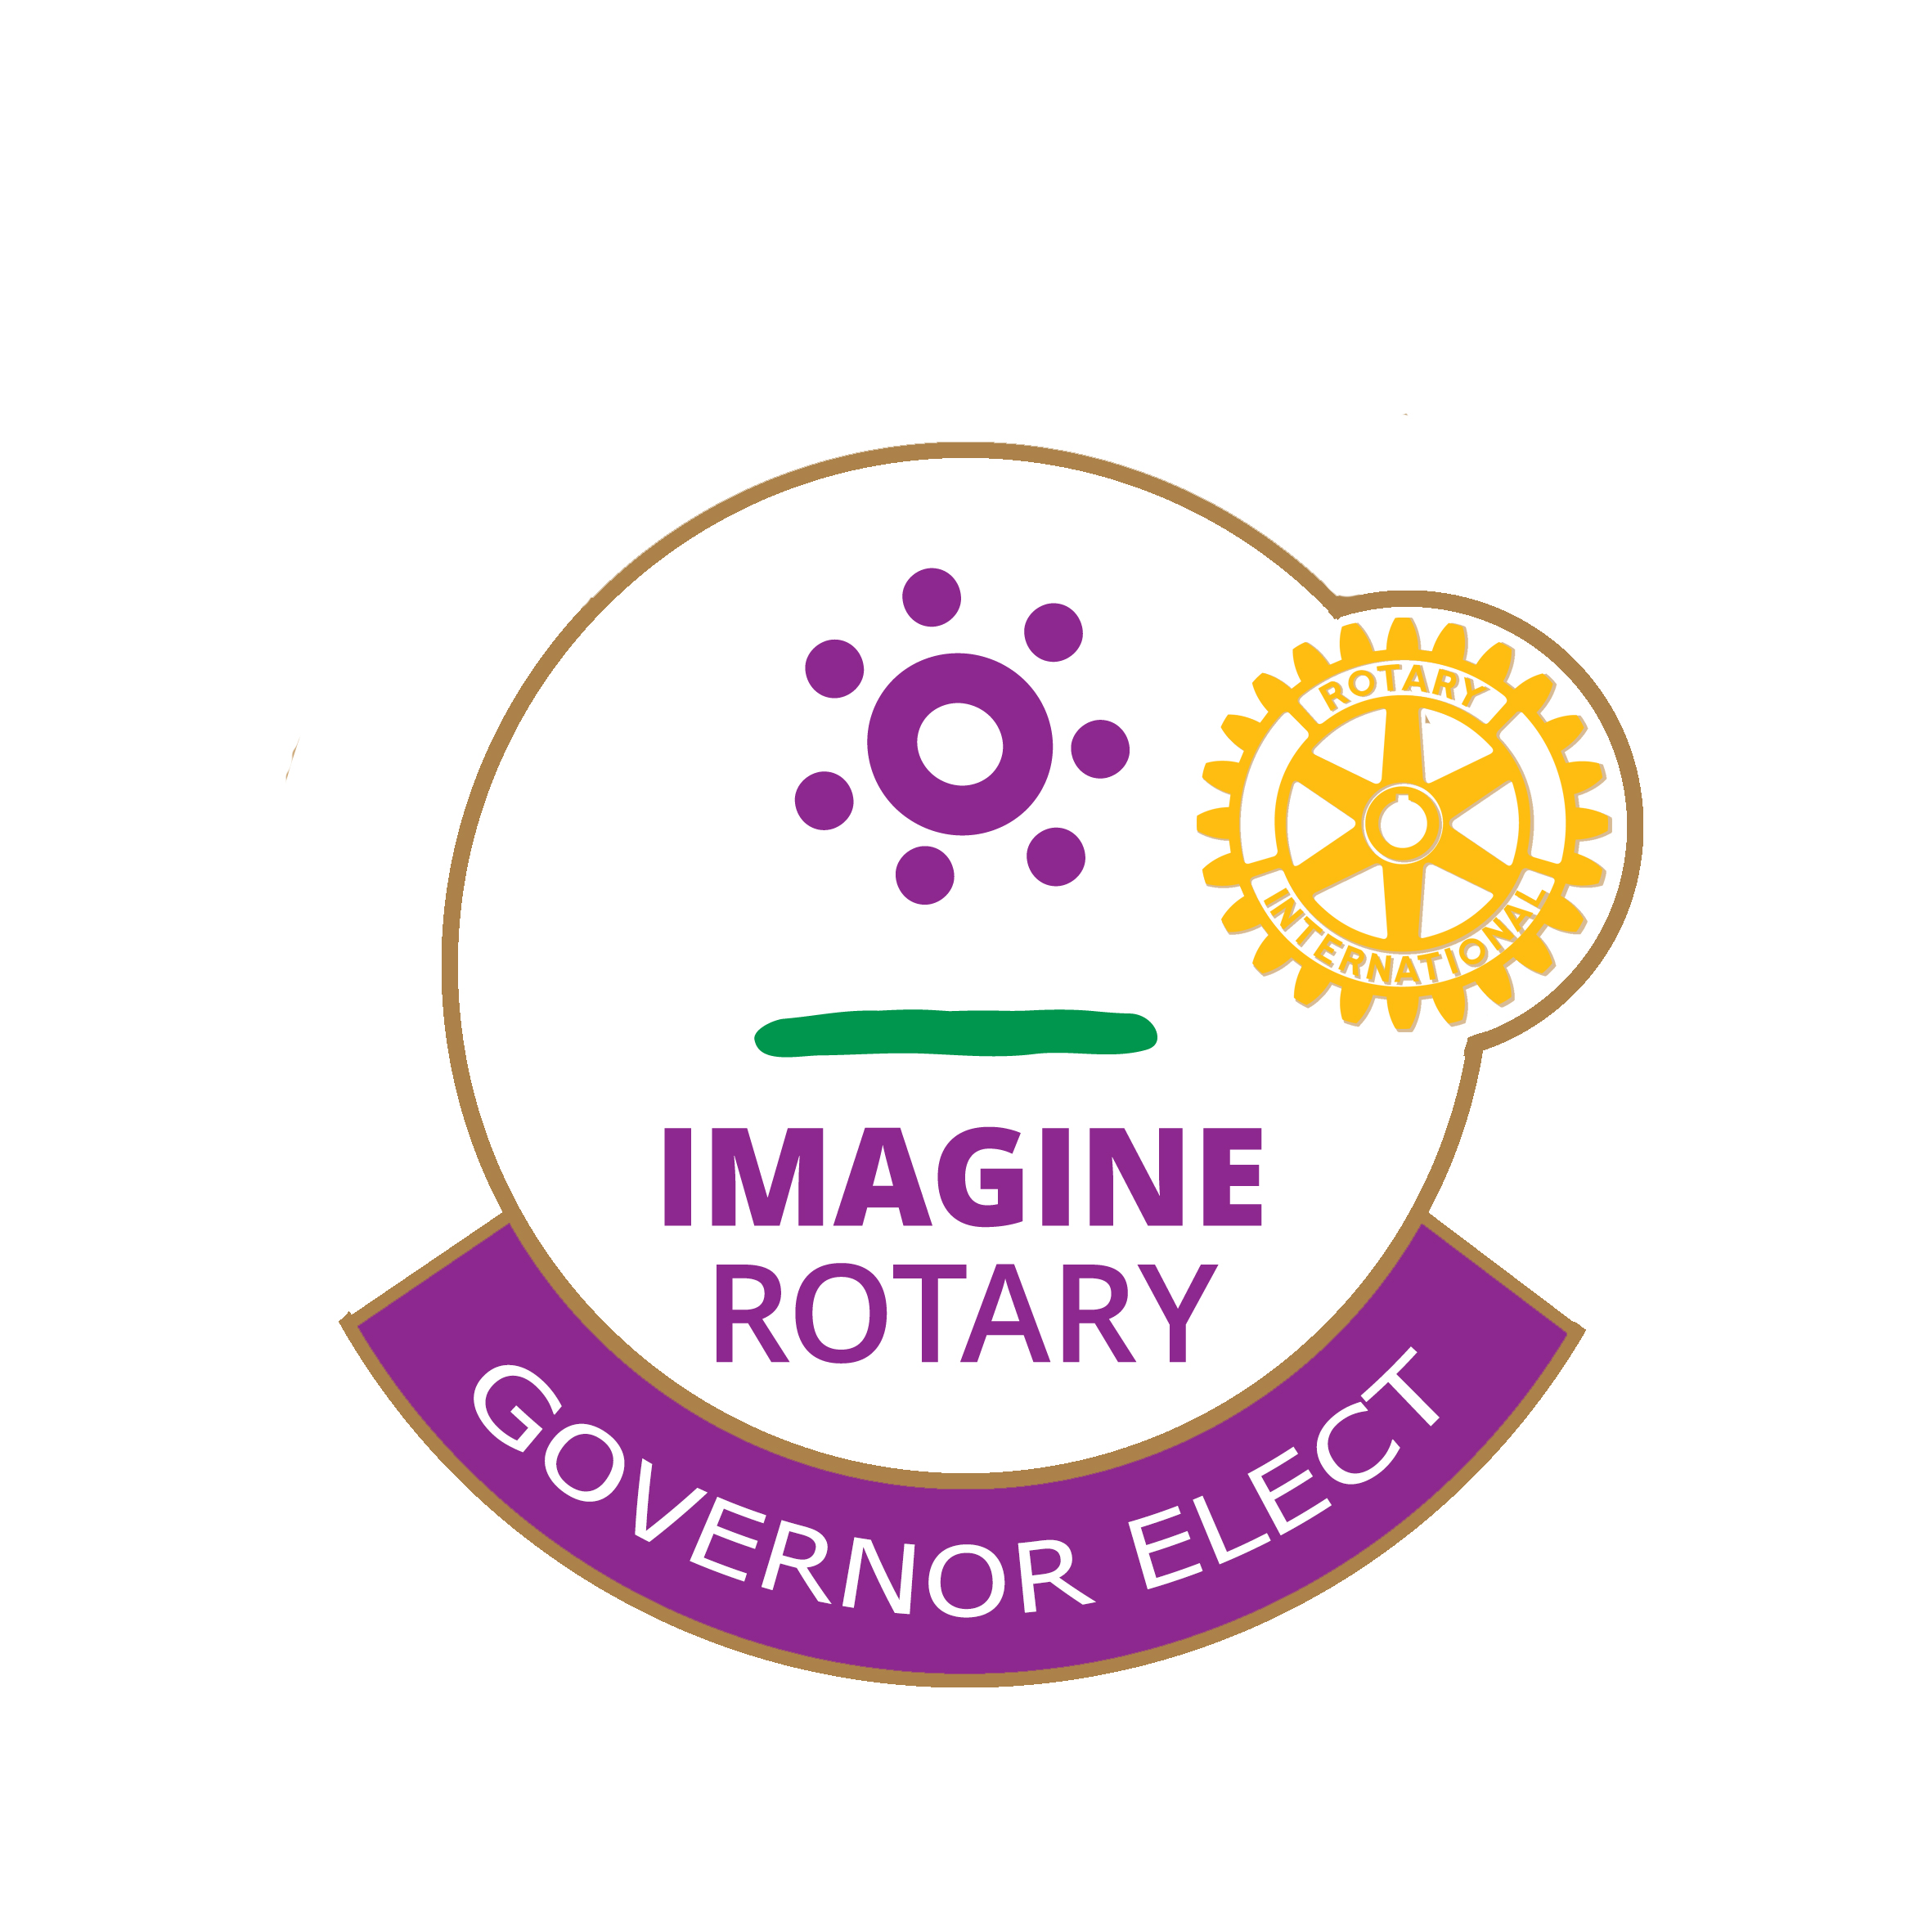 Motto 22/23 "Governor Elect" Pin